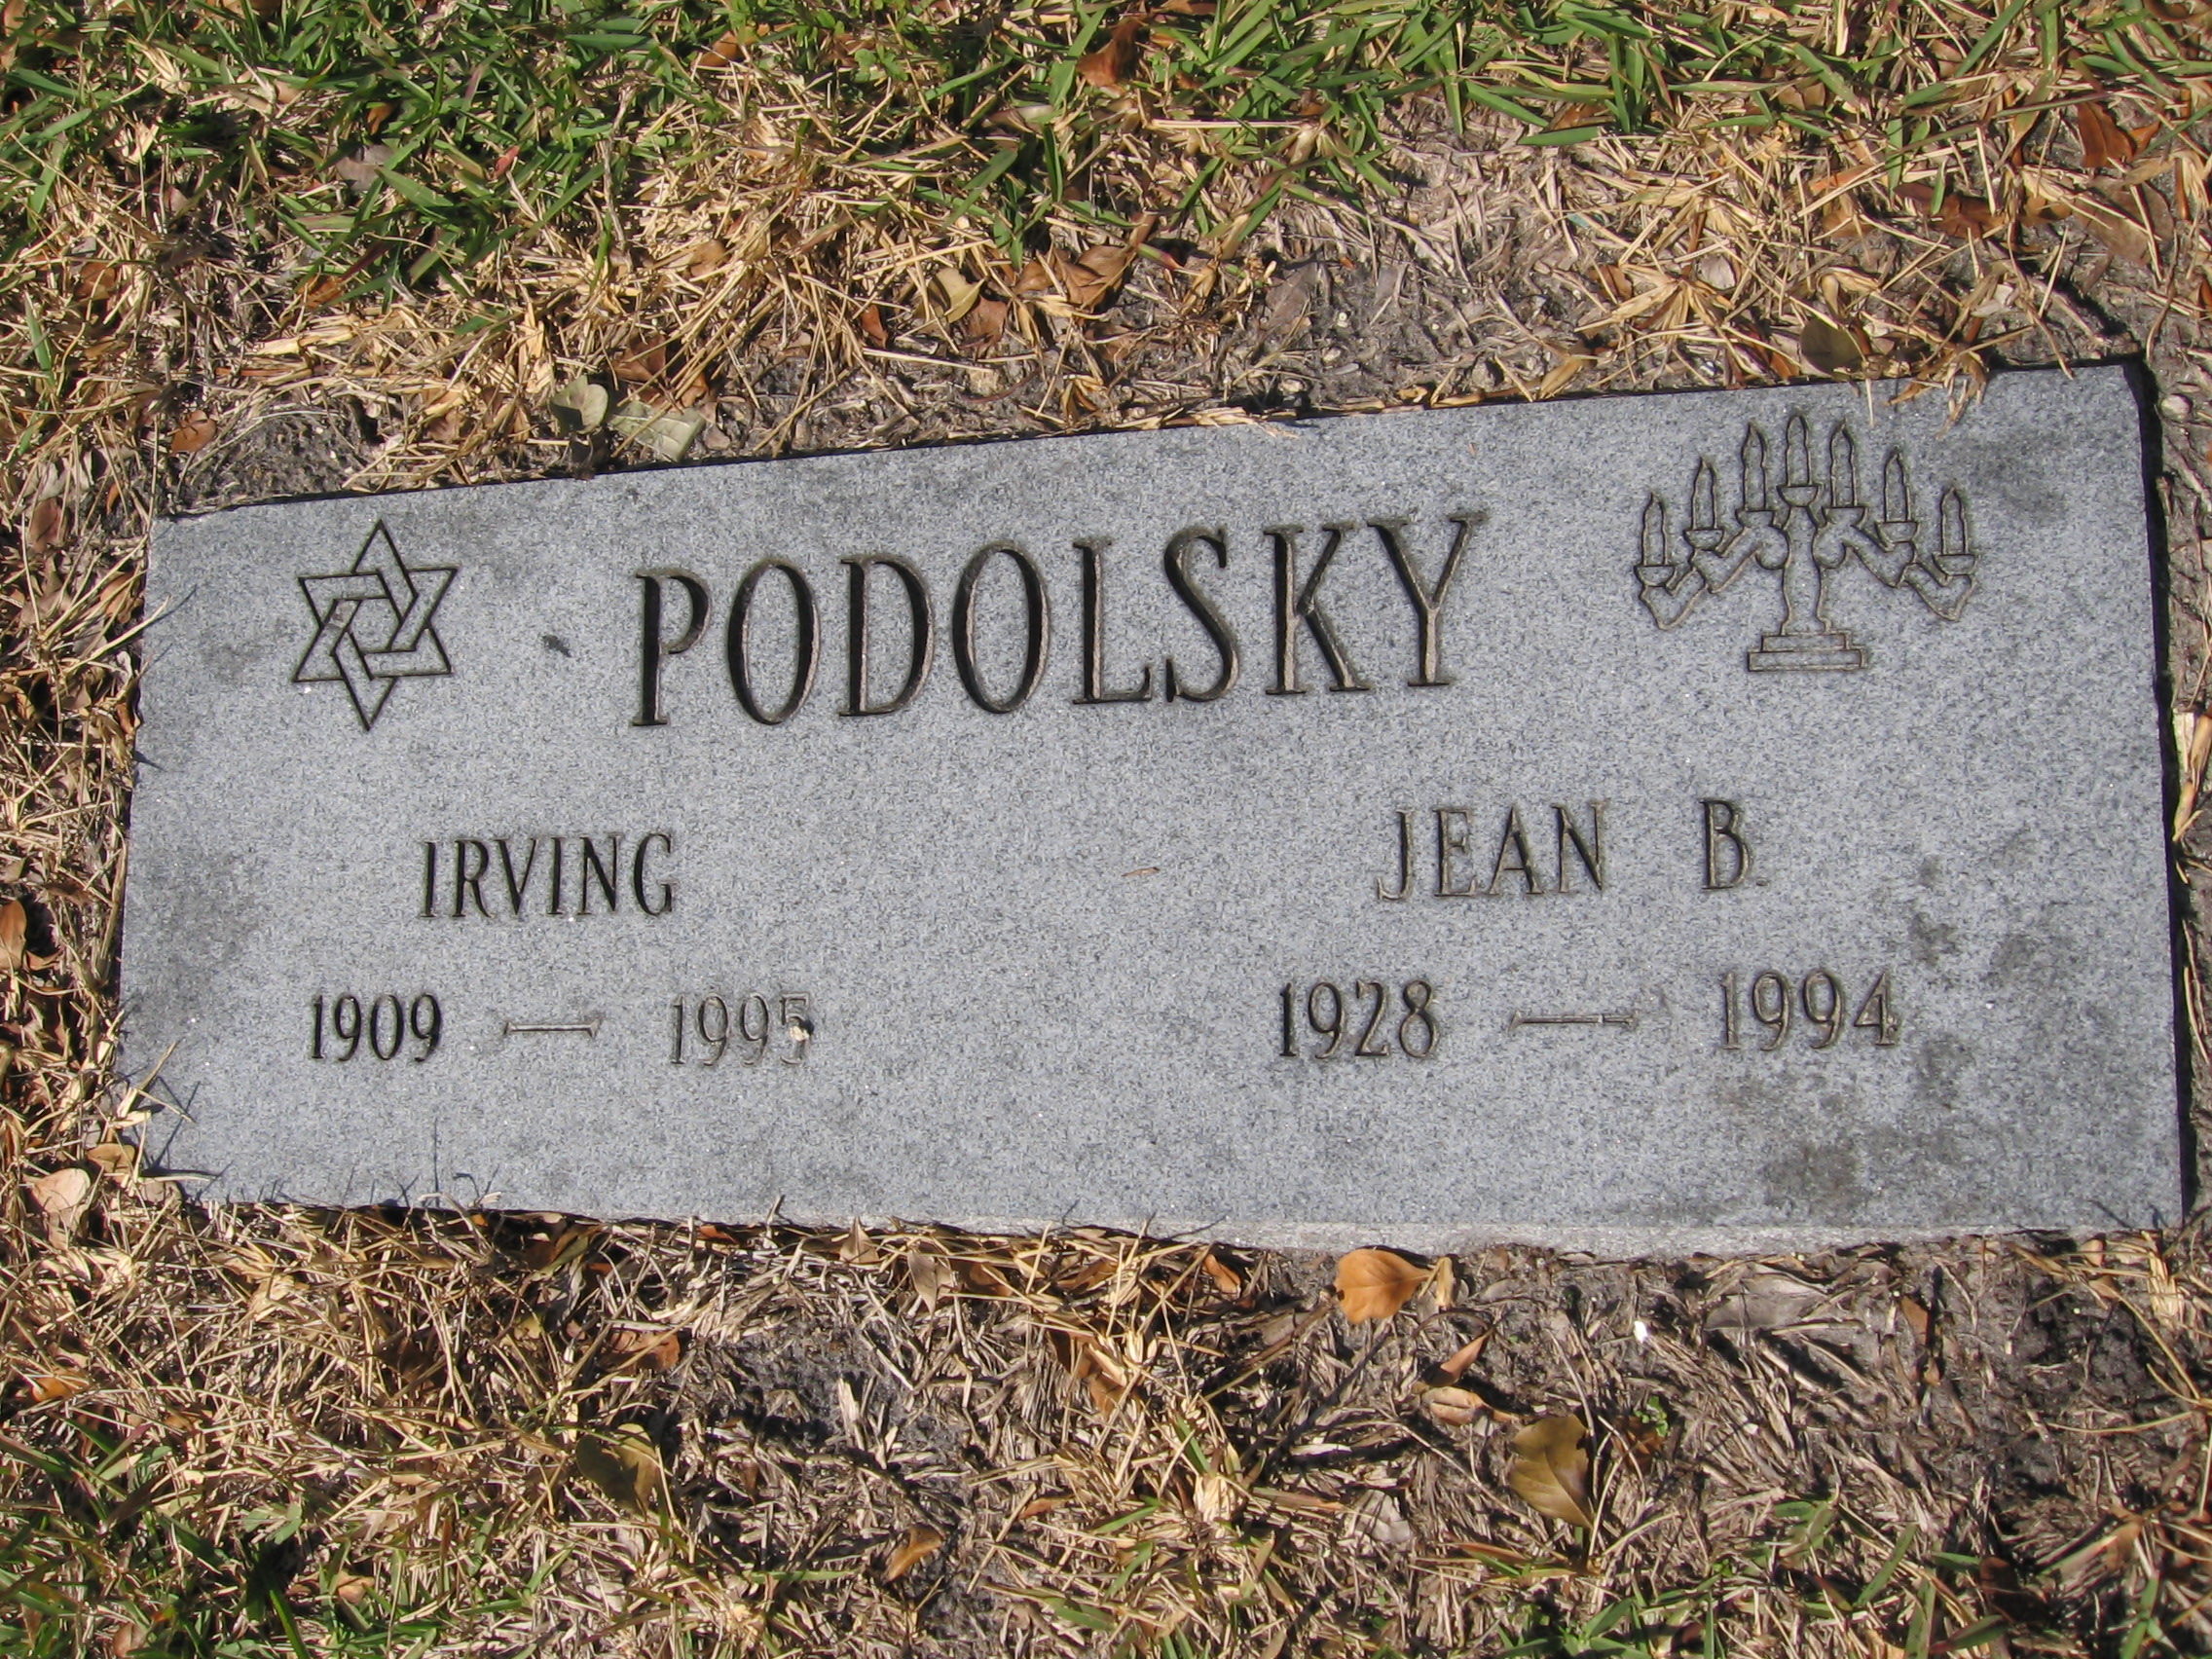 Irving Podolsky